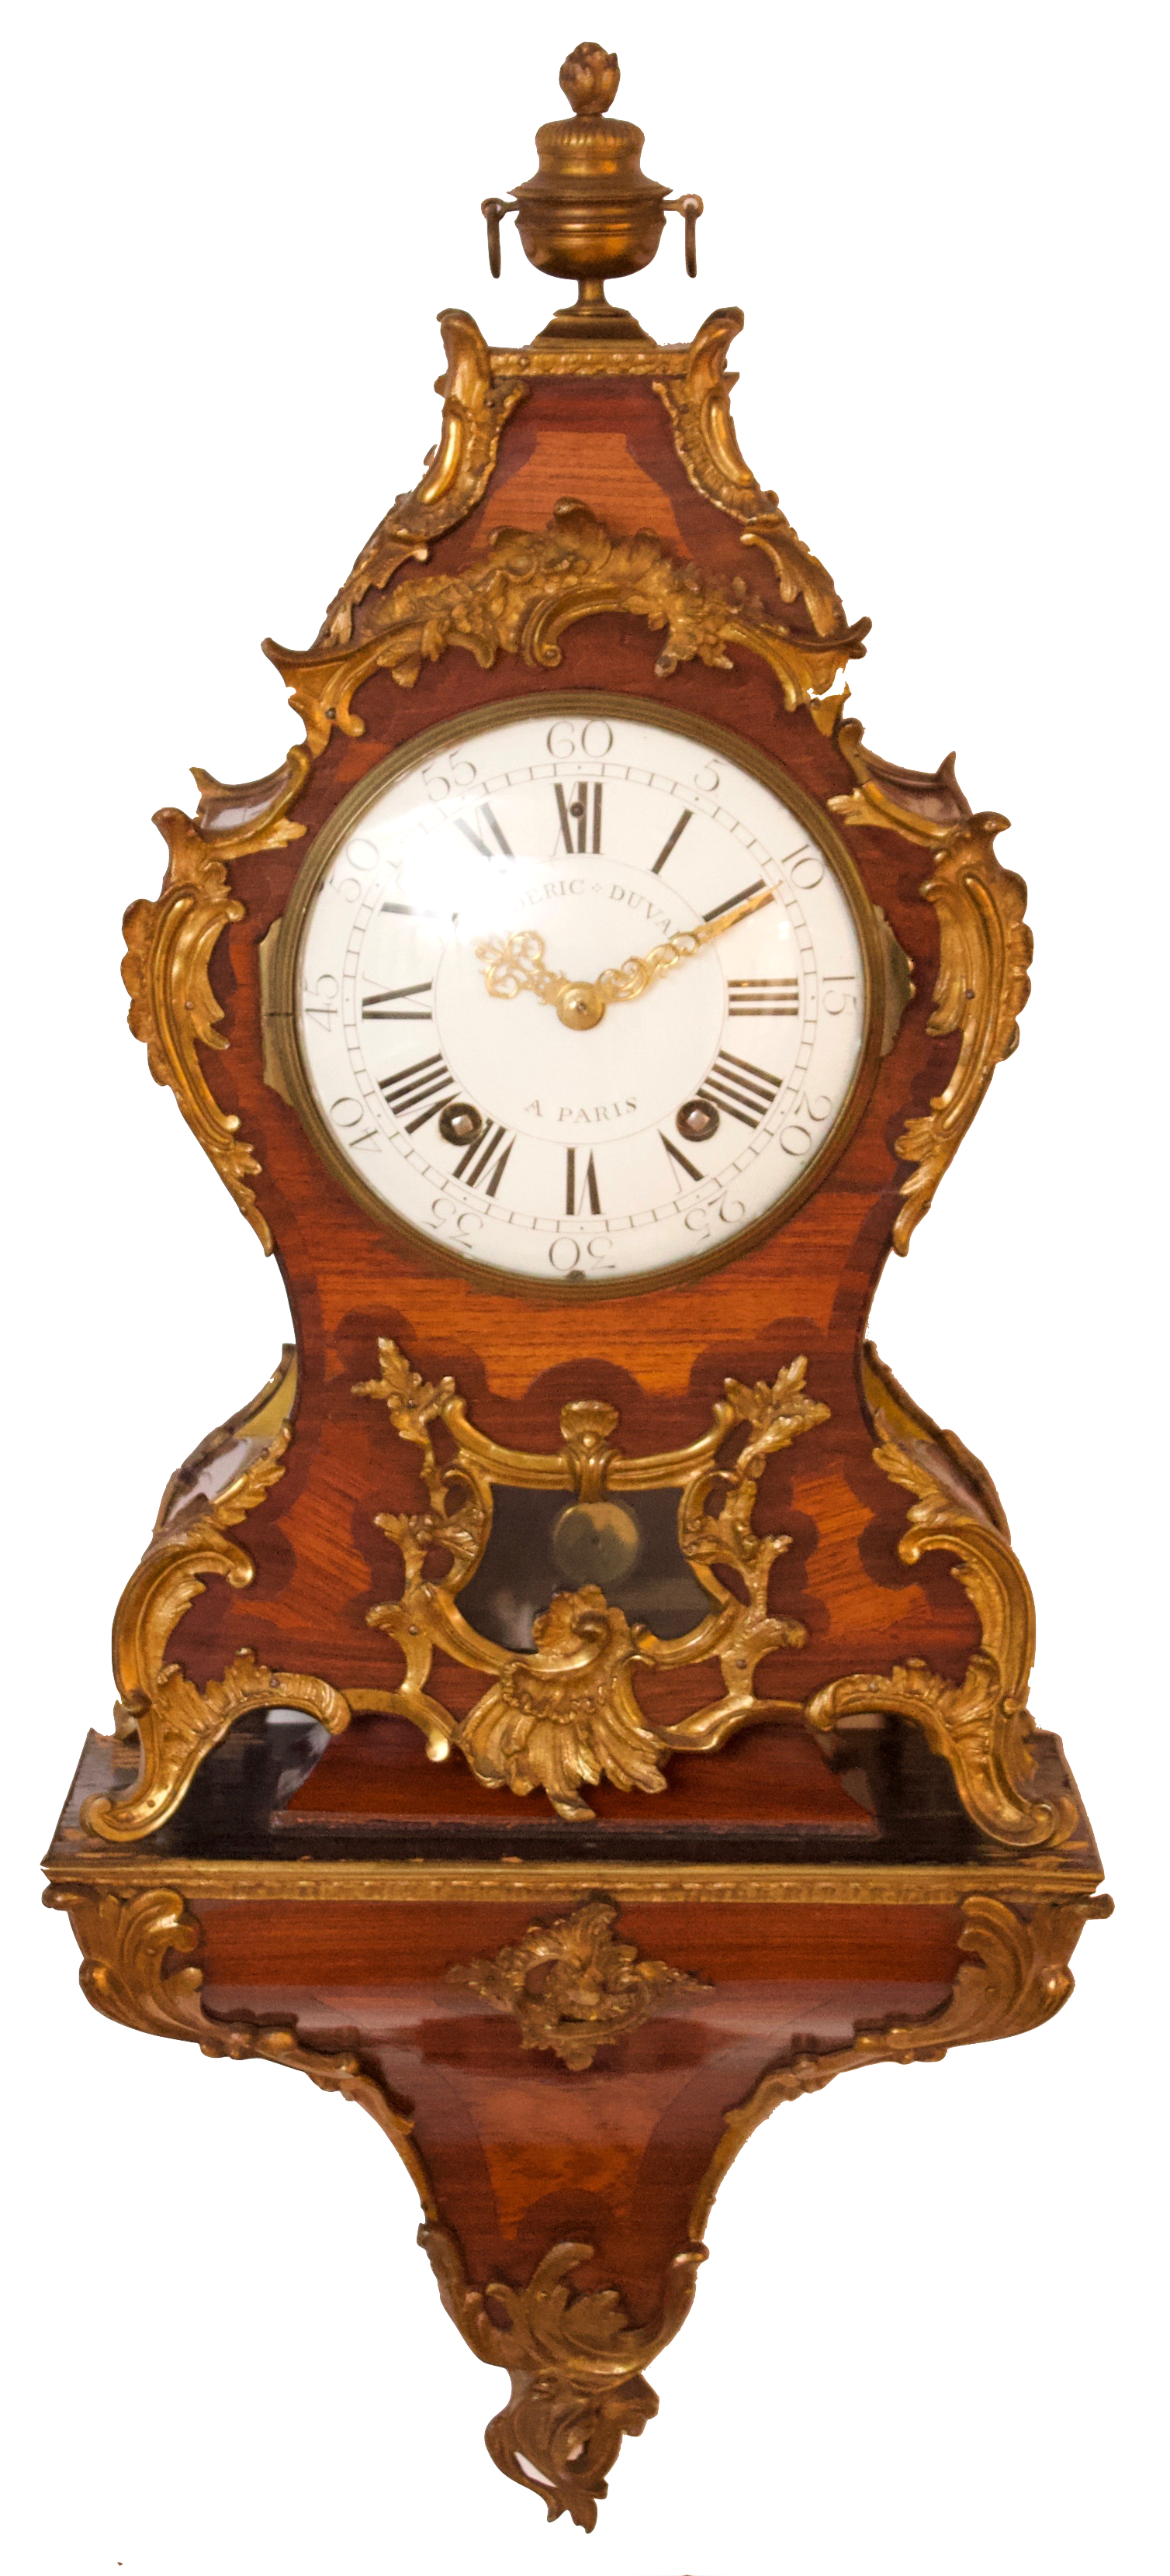 French-Antique clock-Frederic Duval A Paris.-Rosewood cartel-ormolu-bronze ormoly, louis XVI-2